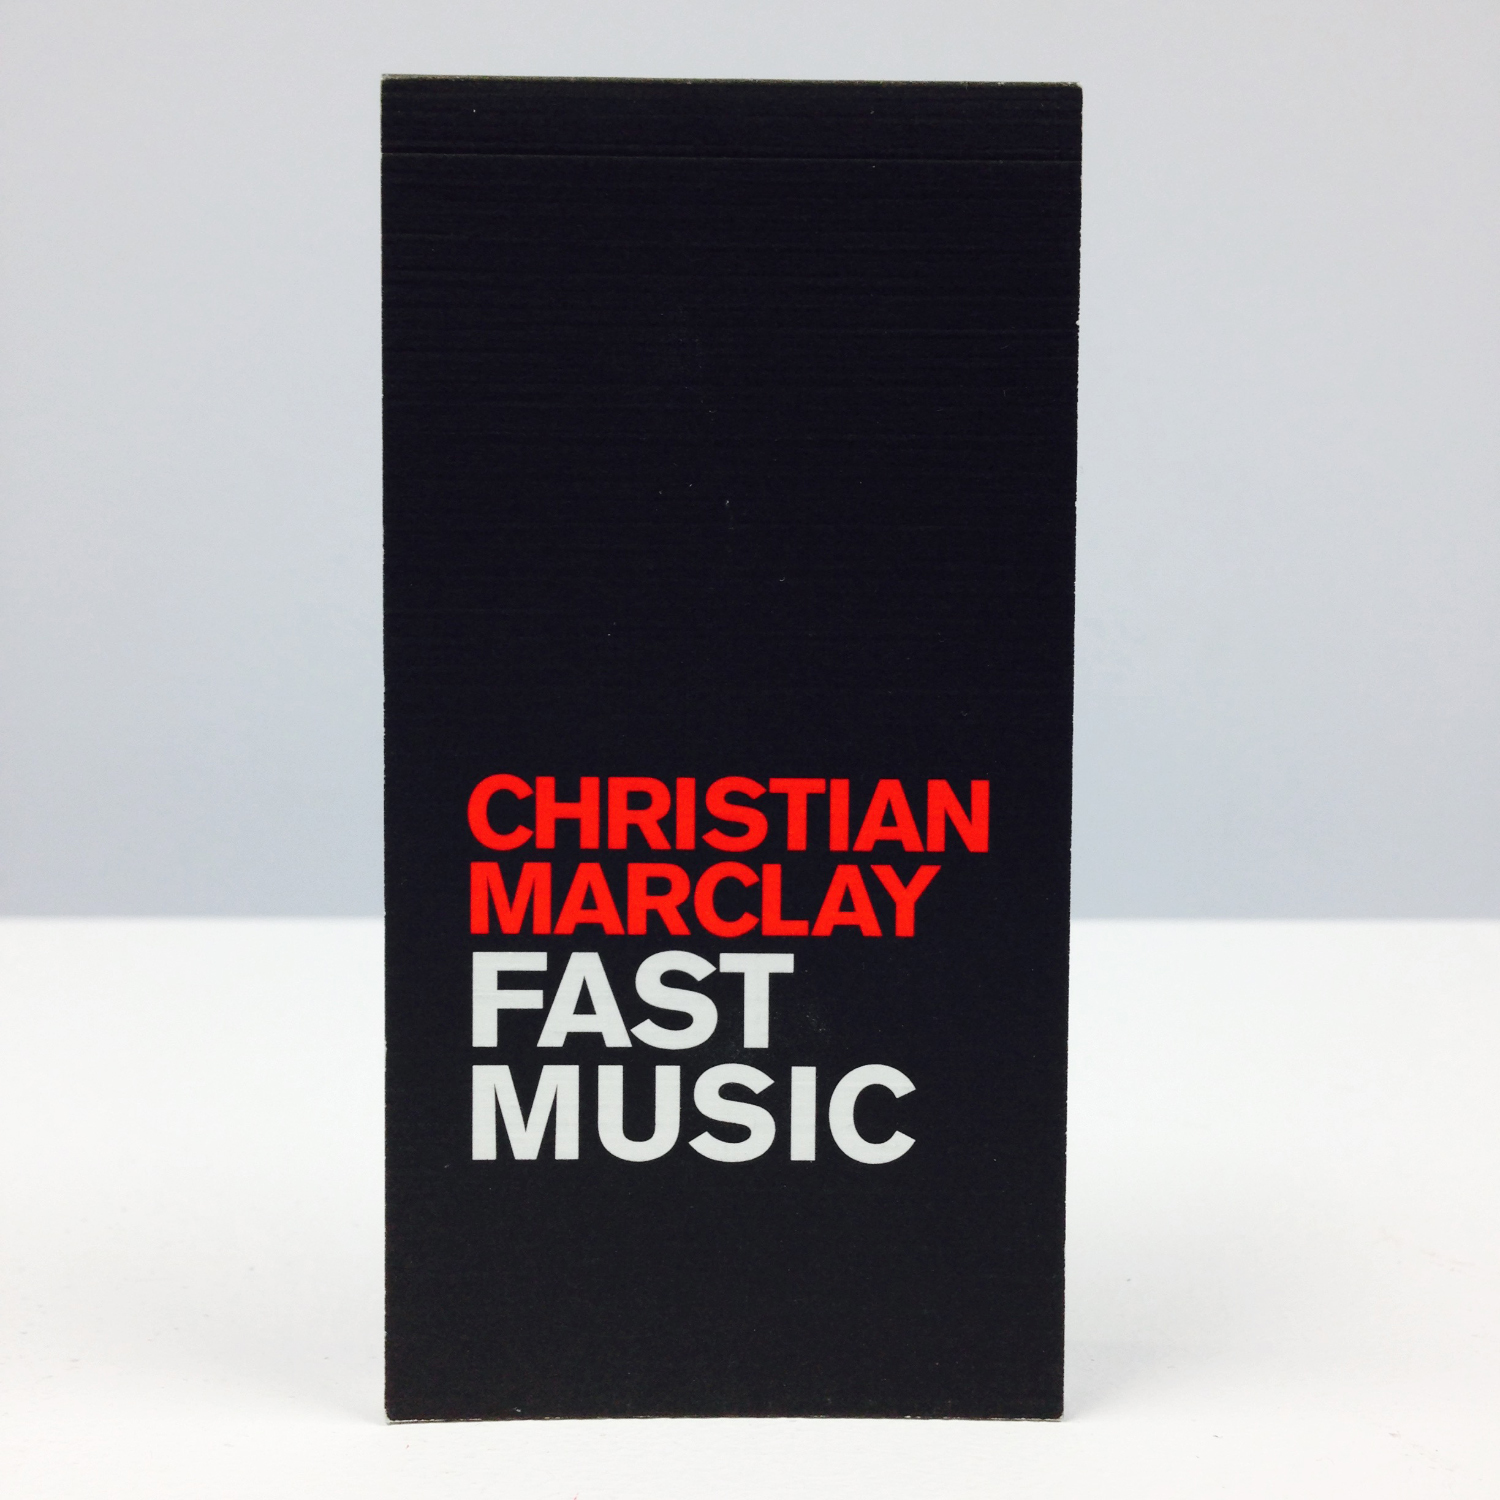 Christianmarclay catalog fastmusic